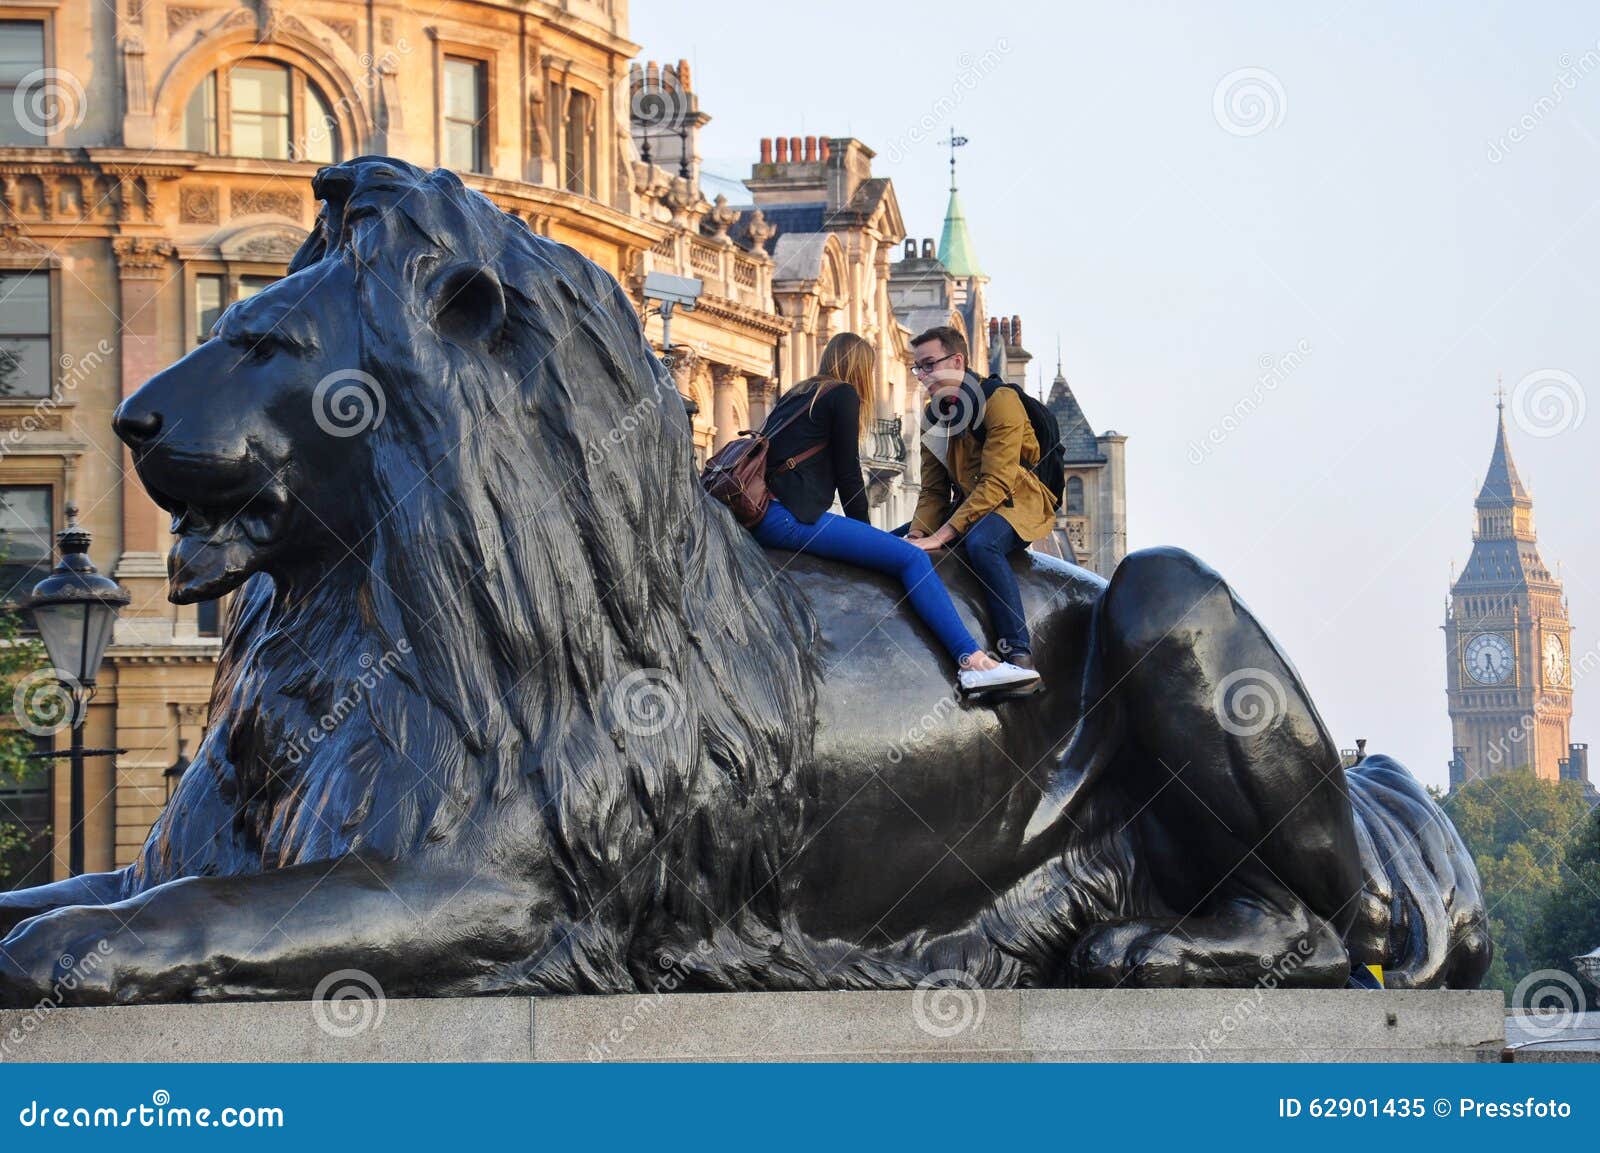 Trafalgar Square Lion, London Editorial Image - Image of europe, icon:  62901435